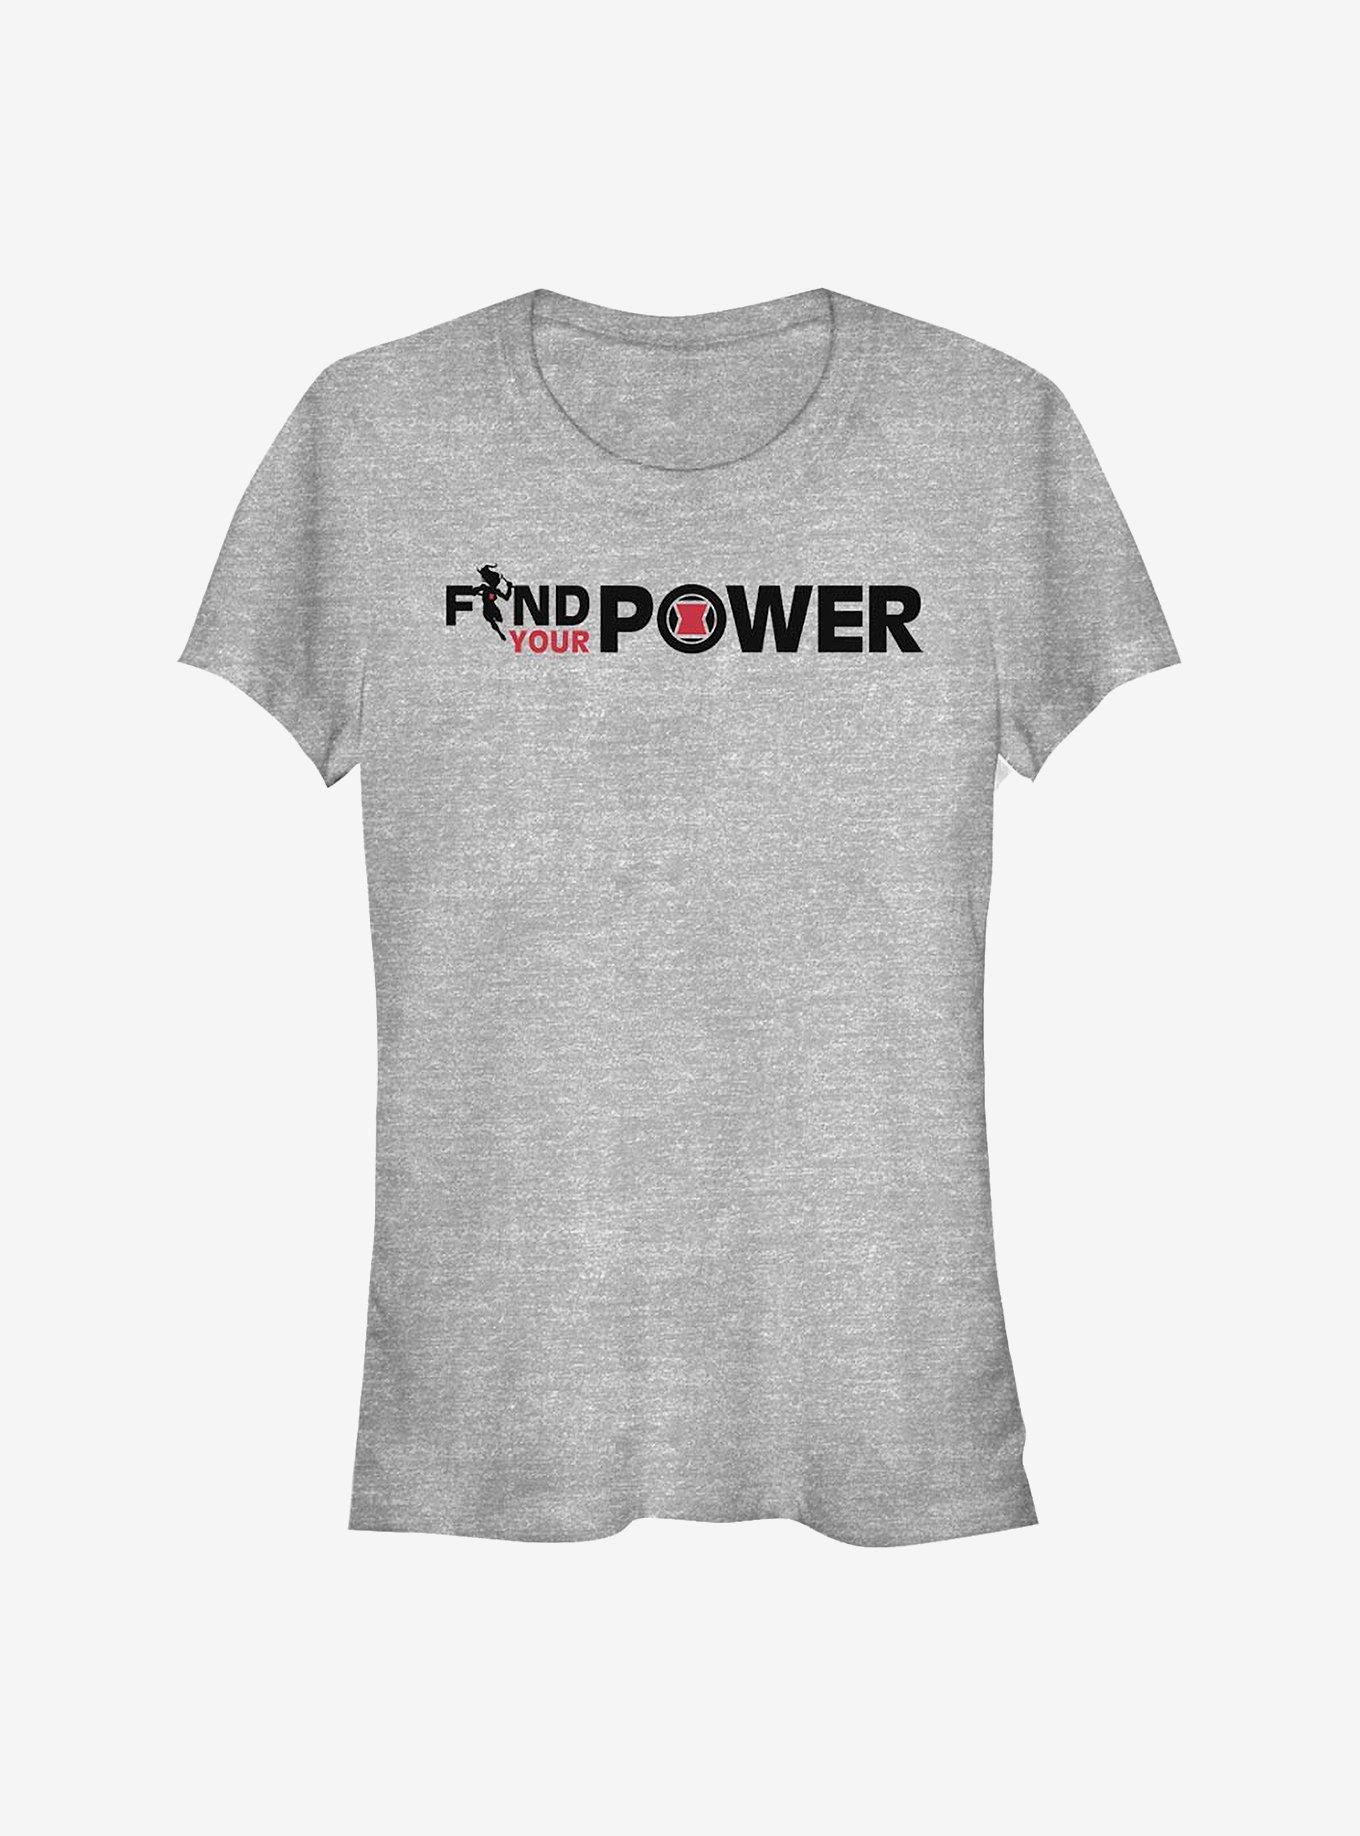 Marvel Black Widow Spy Power Girls T-Shirt, , hi-res